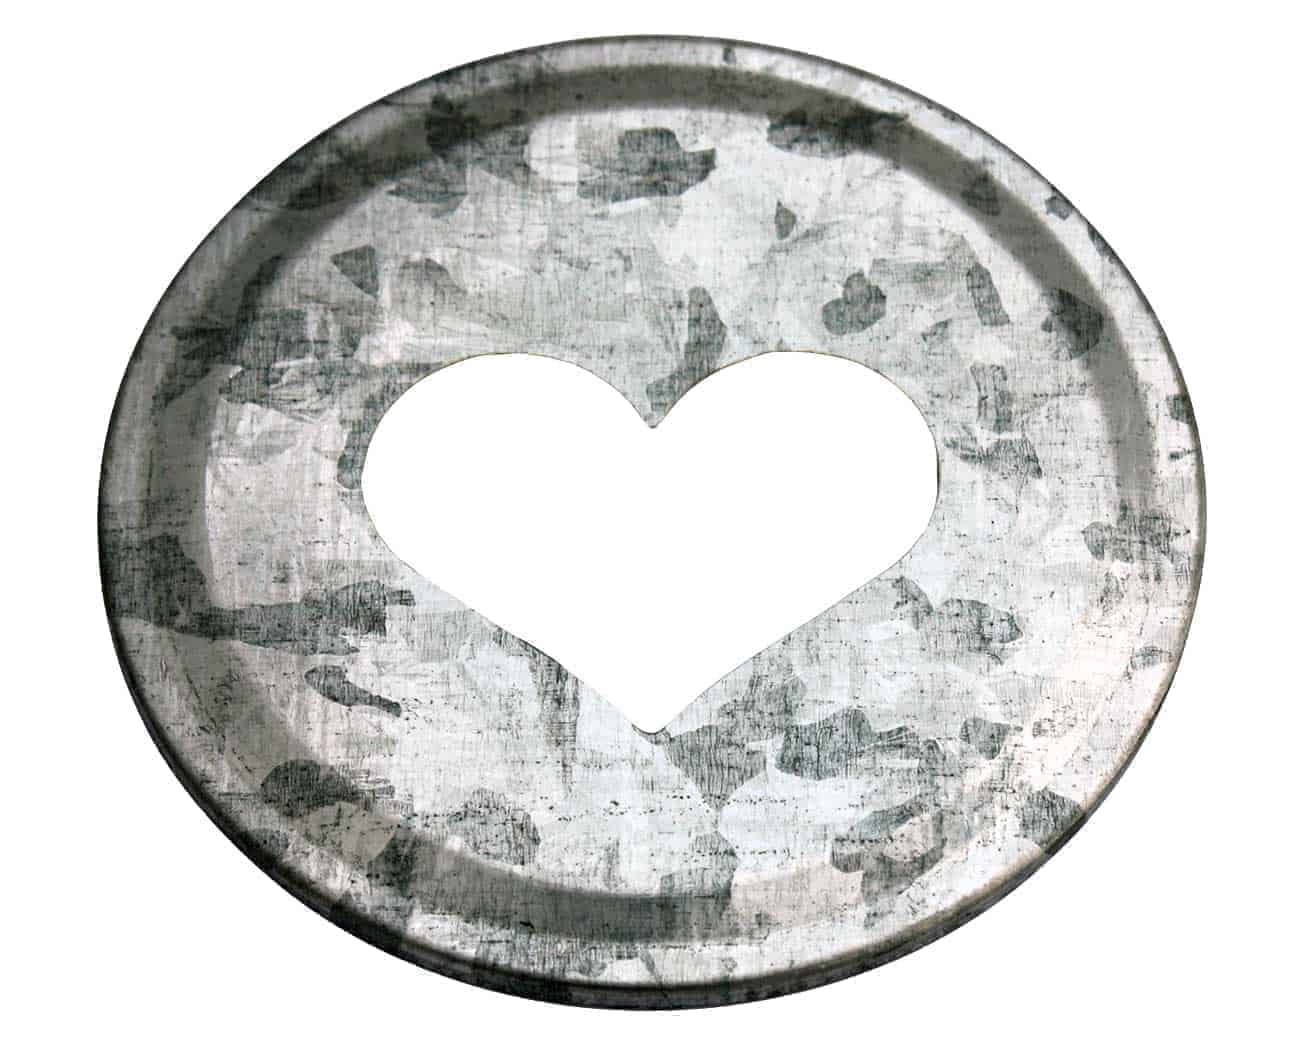 Galvanized heart cutout lid insert for regular mouth Mason jars